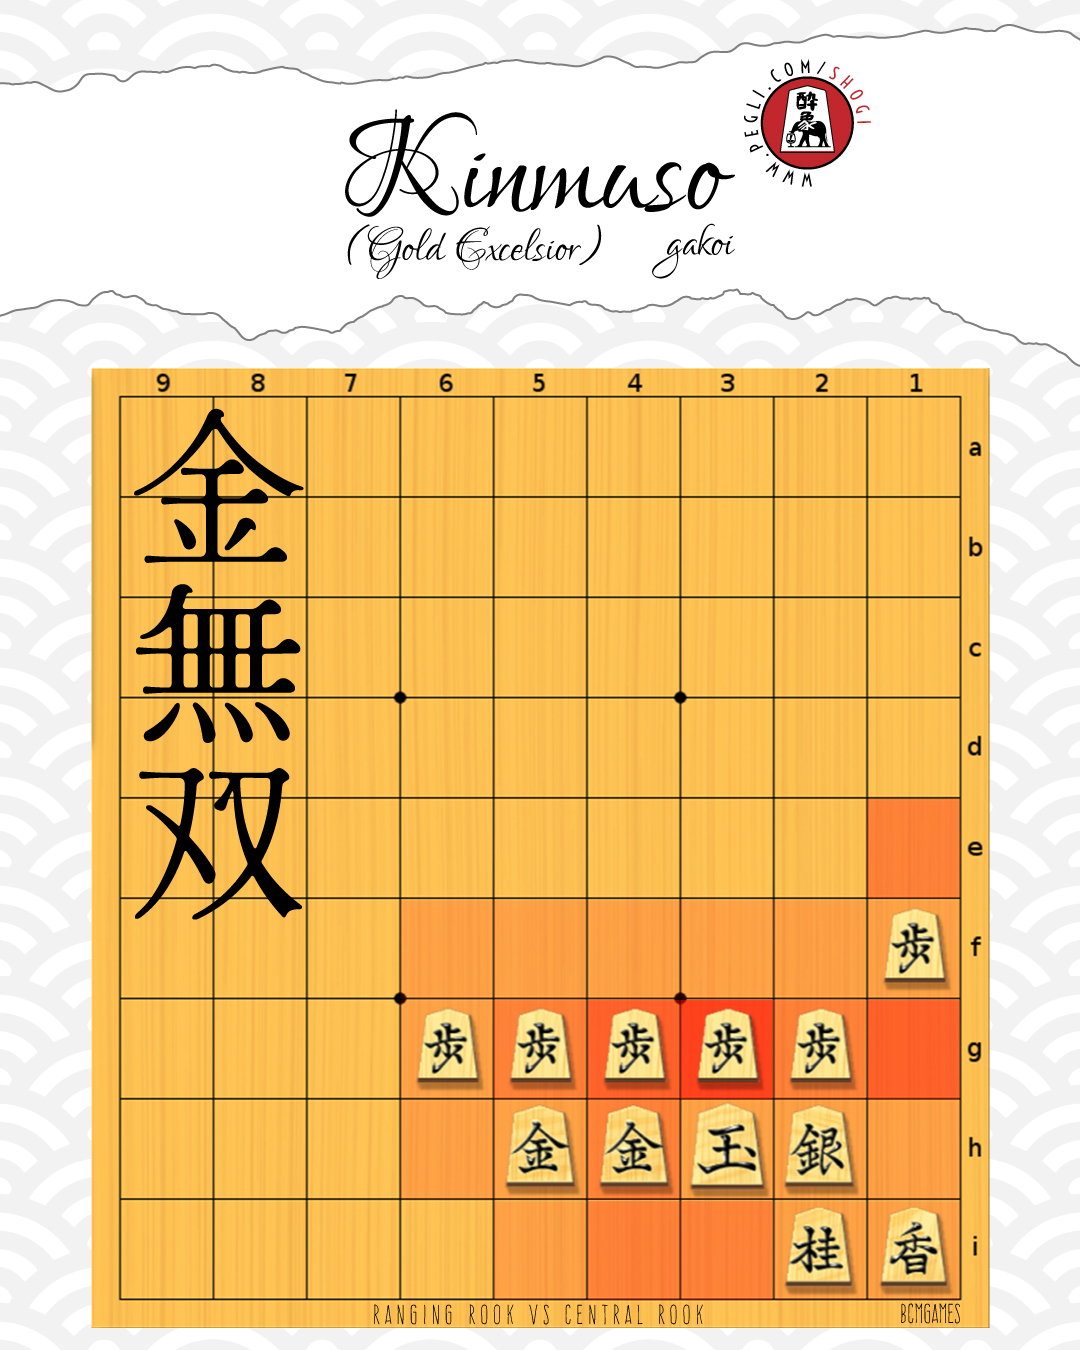 shogi - kakoi: kinmuso gakoi (gold excelsior)